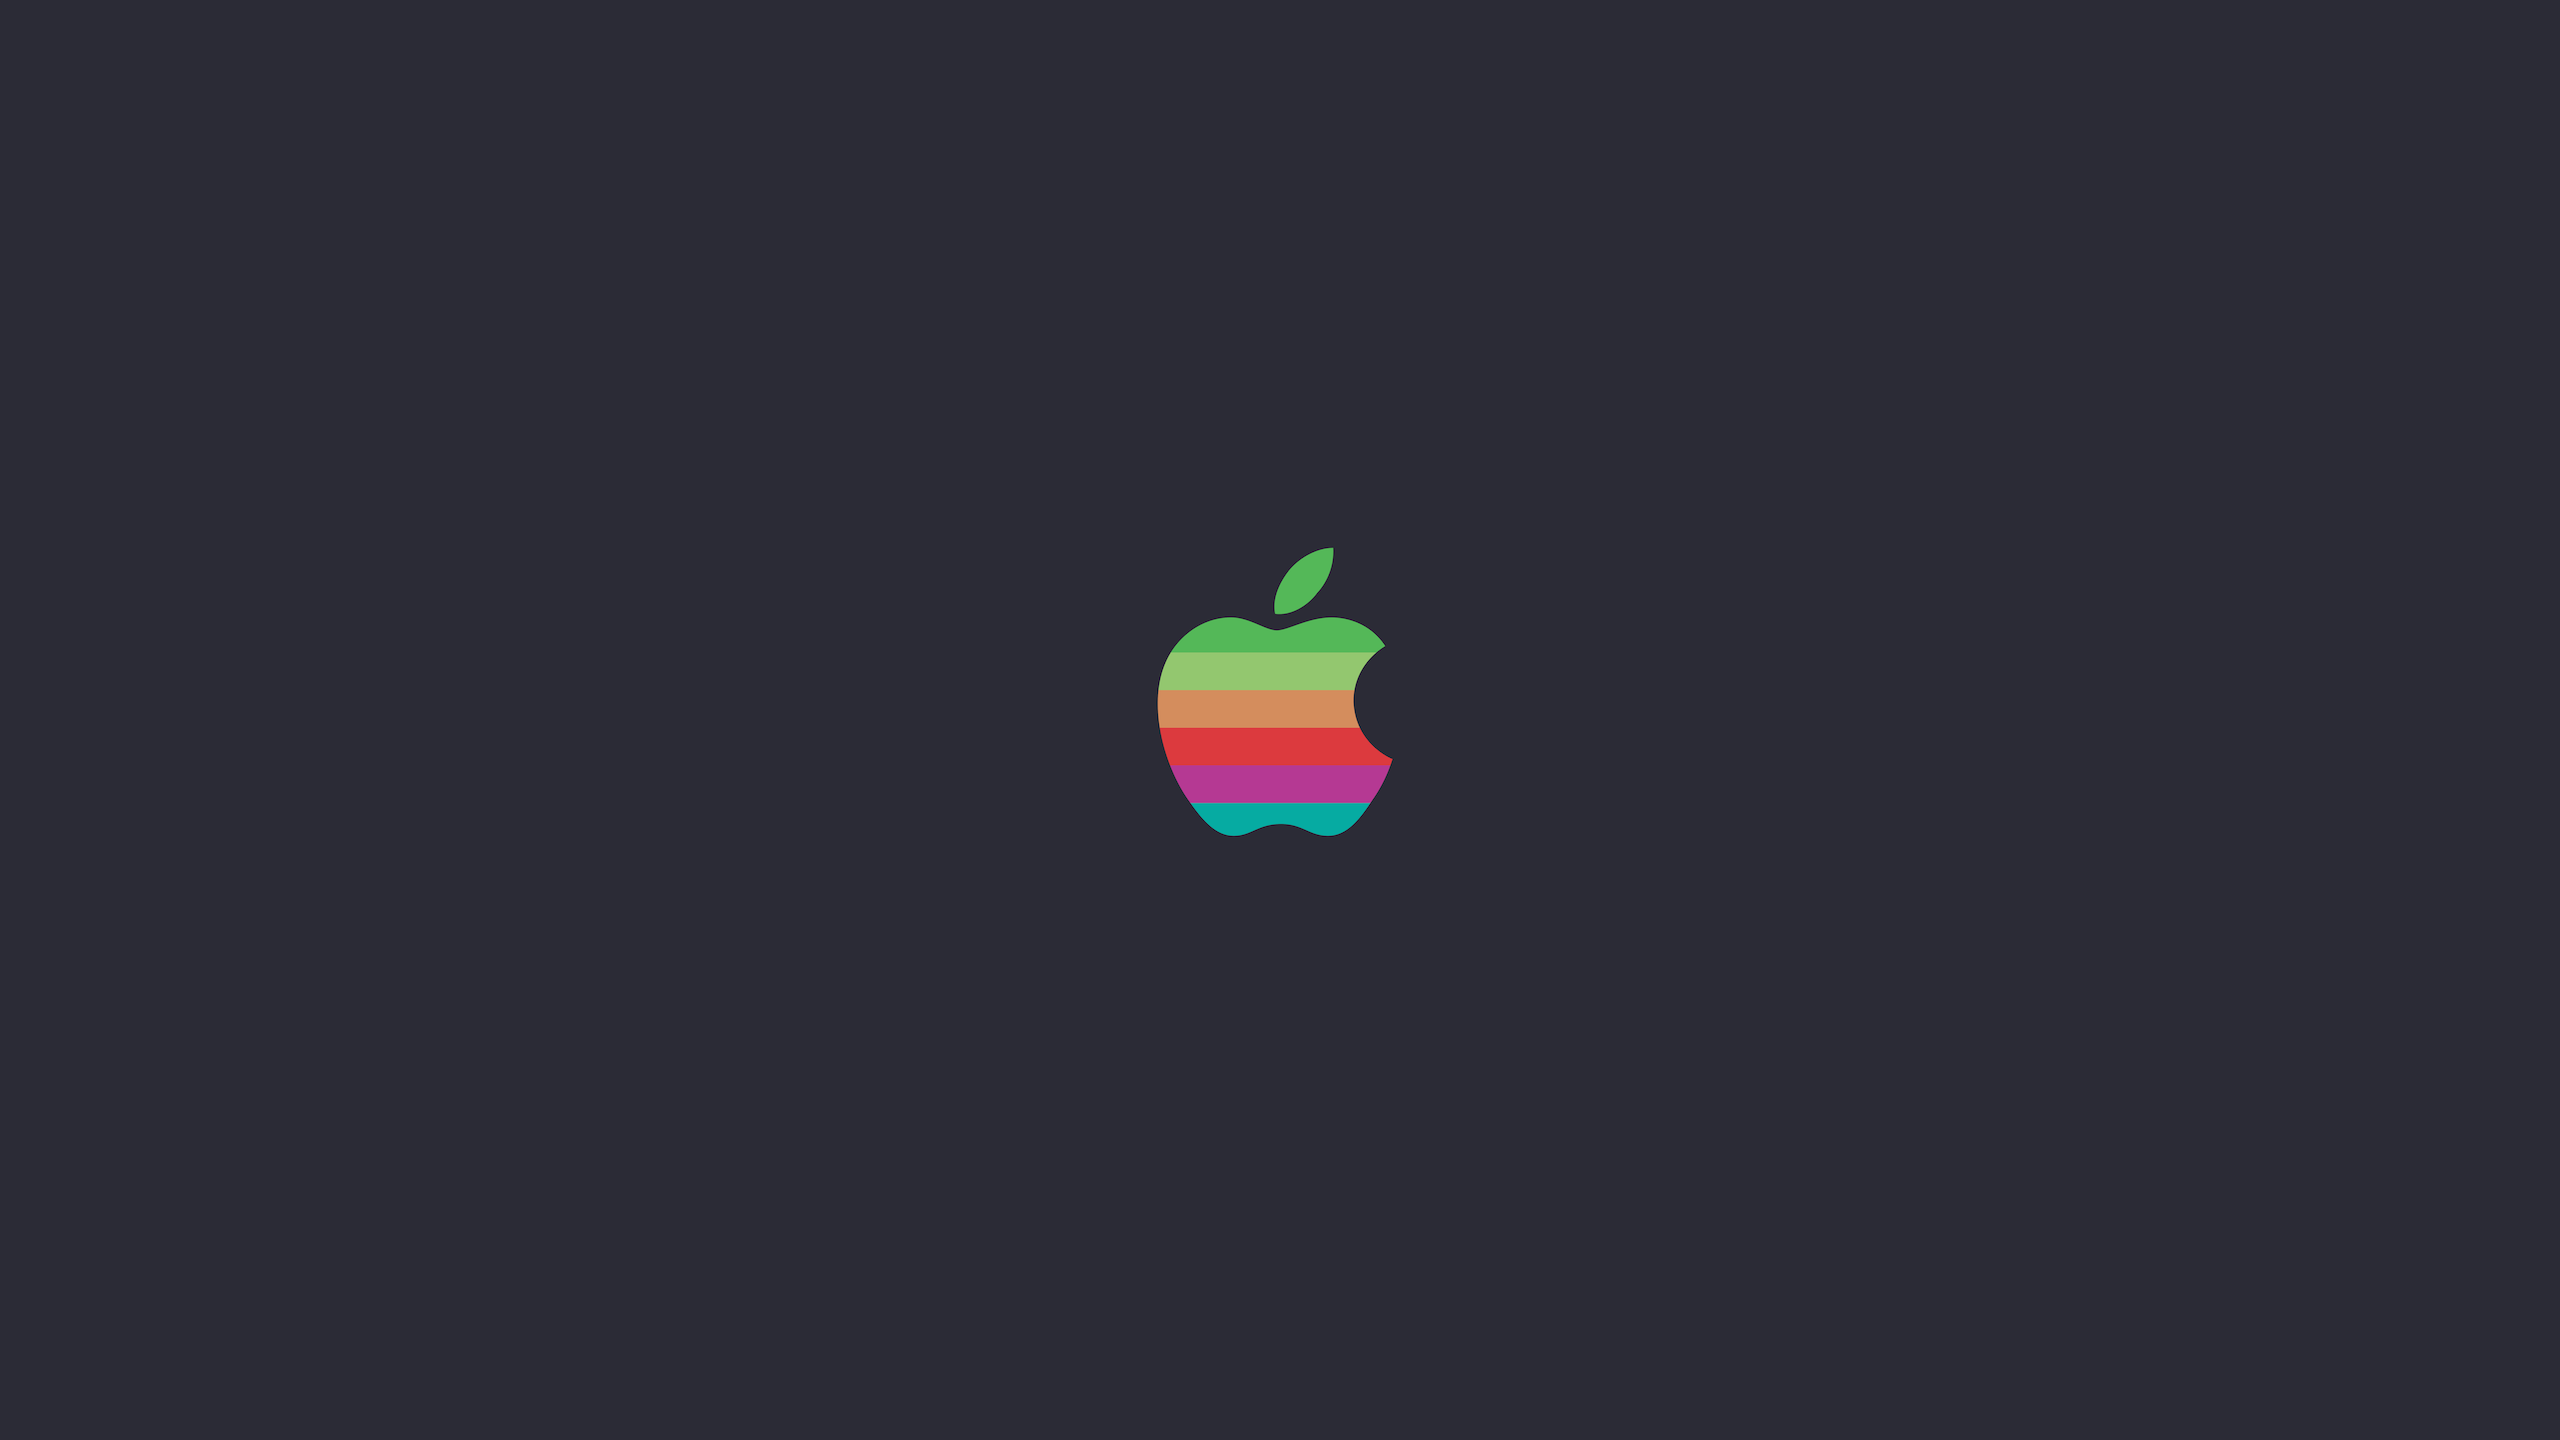 Apple Background, Apple, Background, Black, Pink, Rainbow, Brands